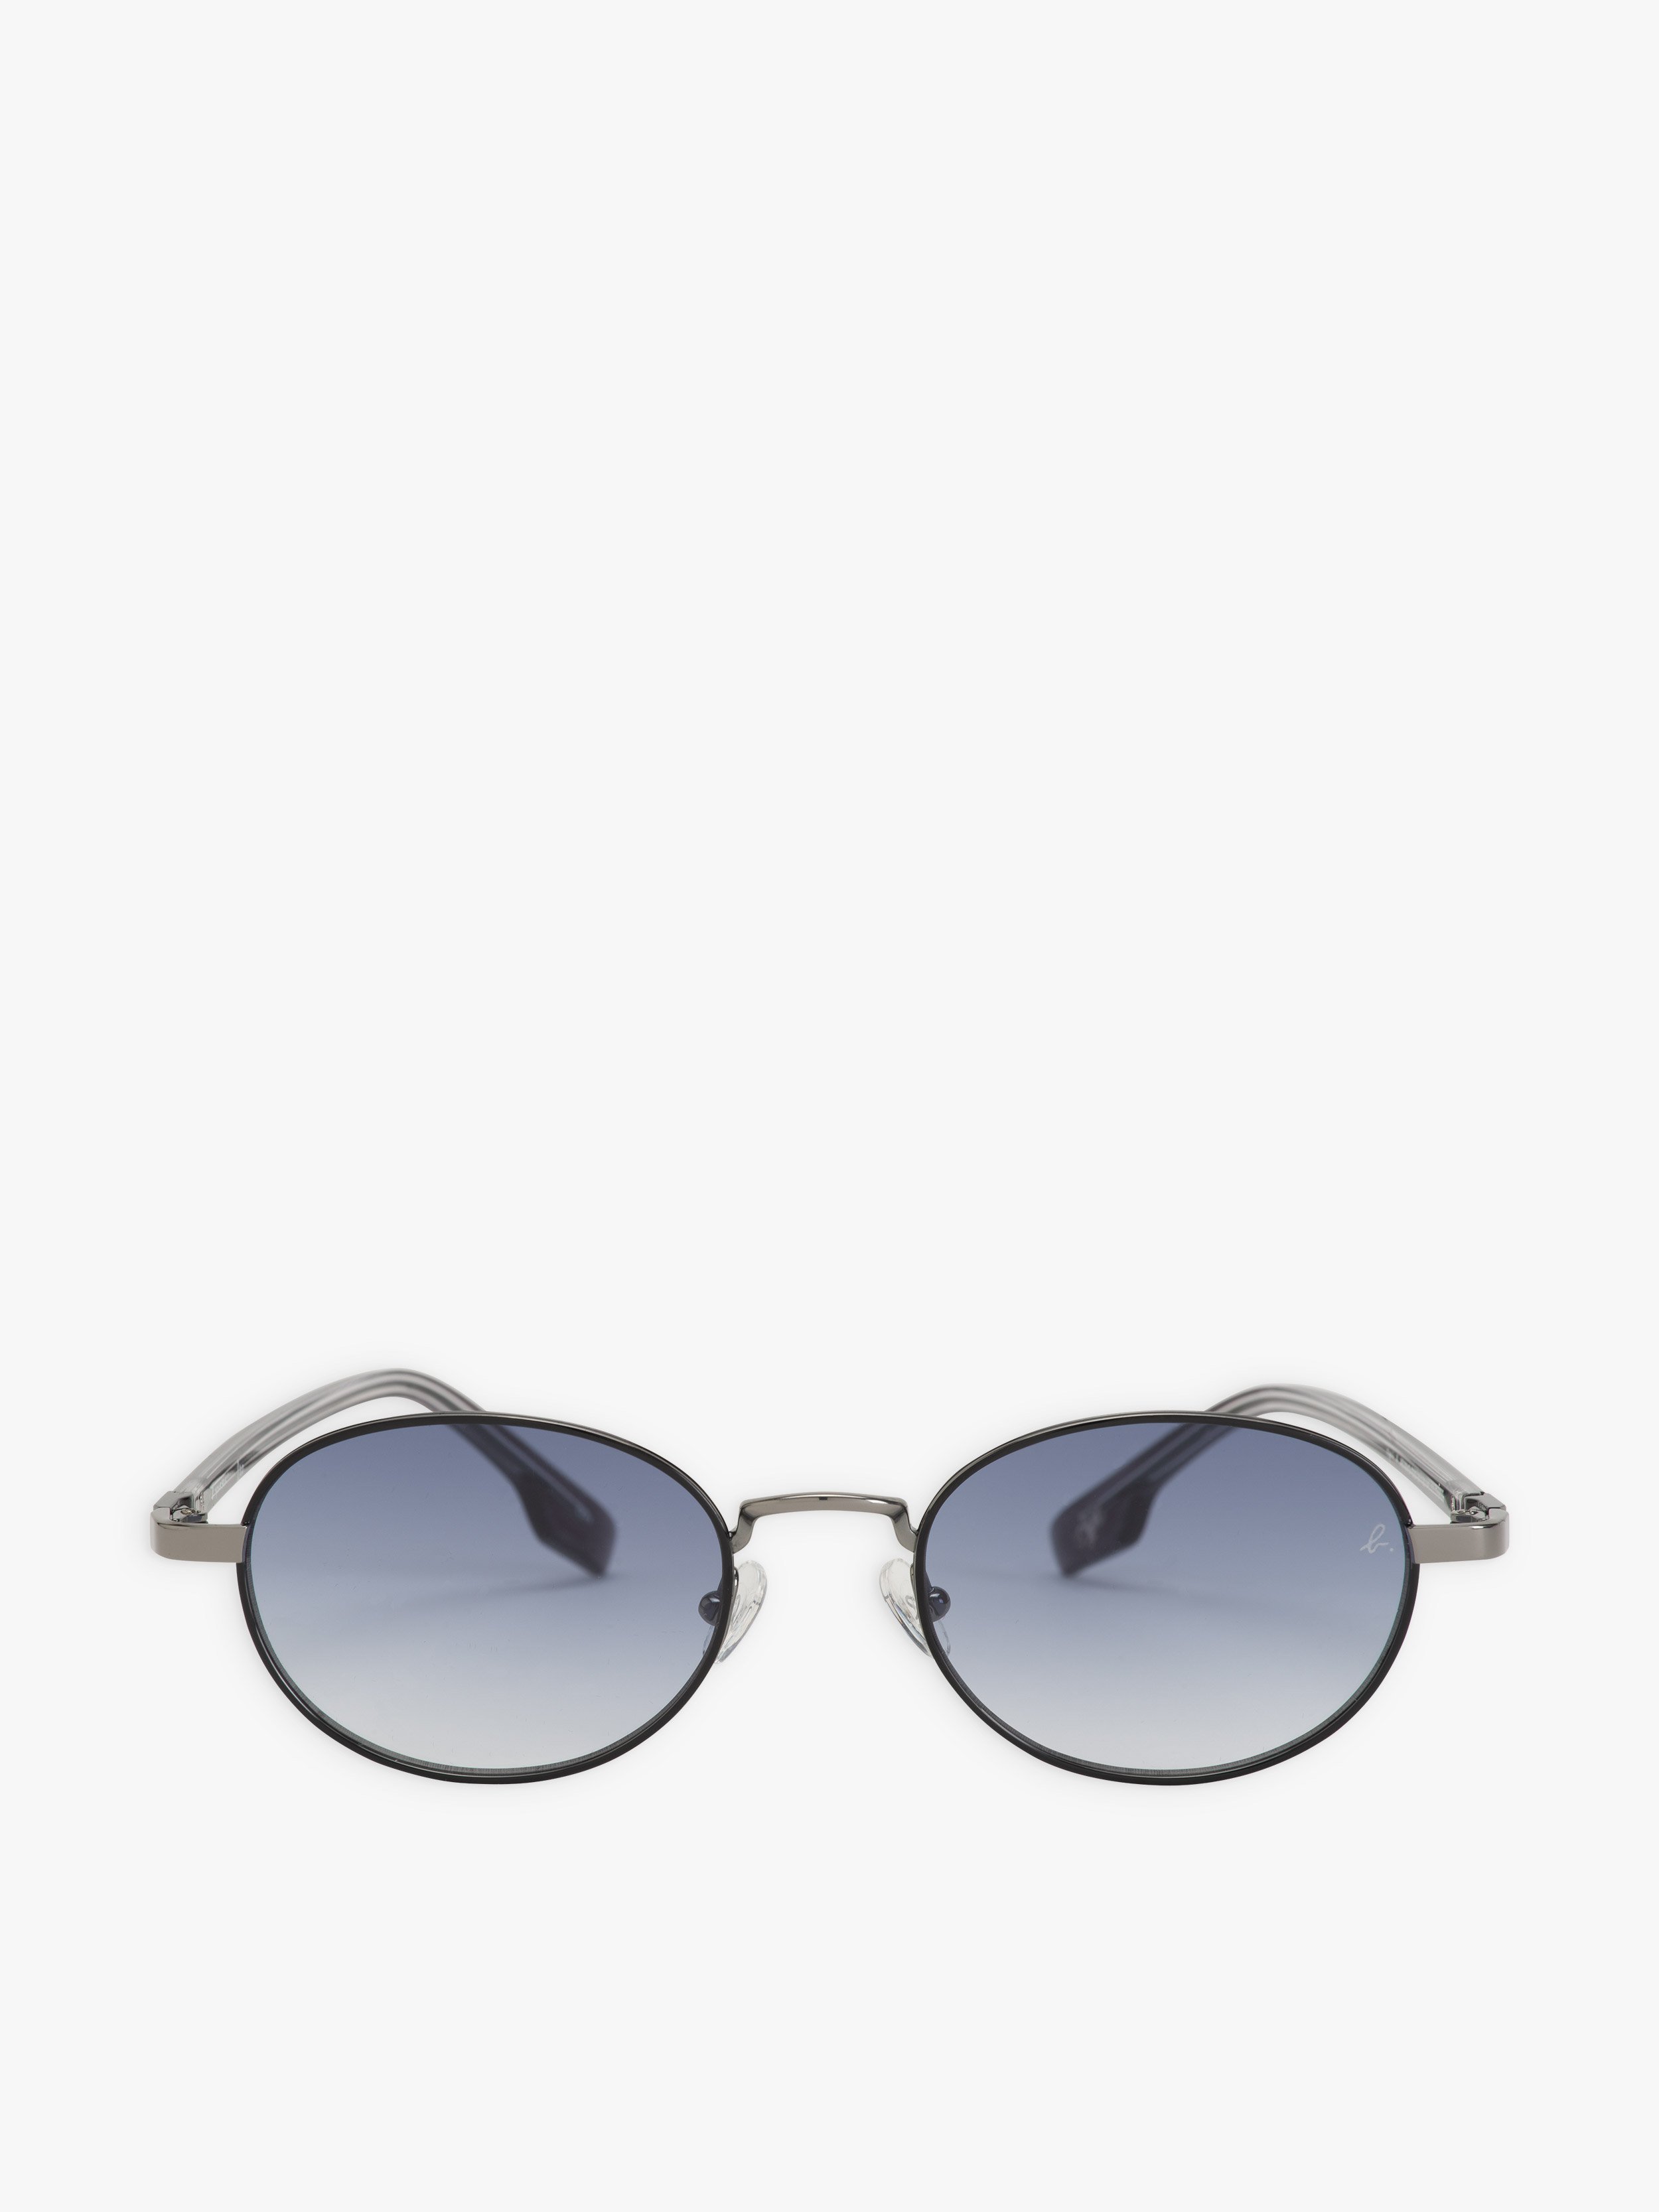 black and navy blue Leo unisex sunglasses | agnès b.